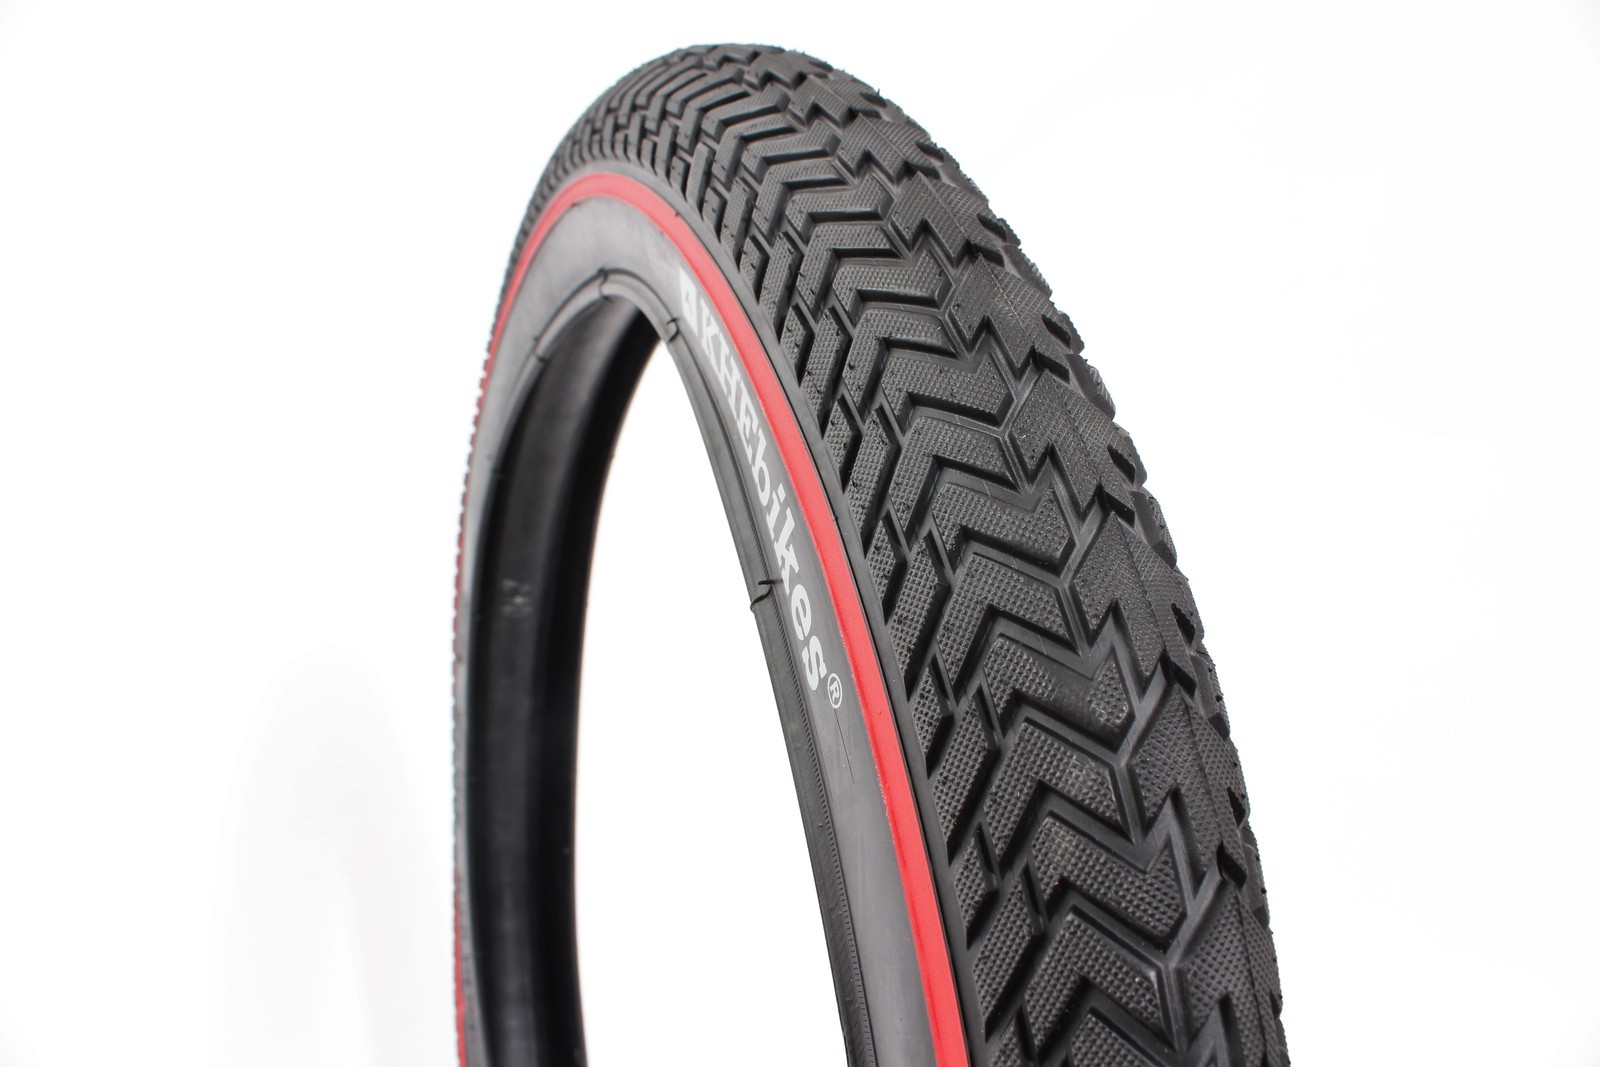 KHE MVP BMX Bike Tyre Street 20" x 2.30", Black with Red Pinline KHE MVP BMX Bike Tyre Street 20" x 2.30", Black with Red Pinline